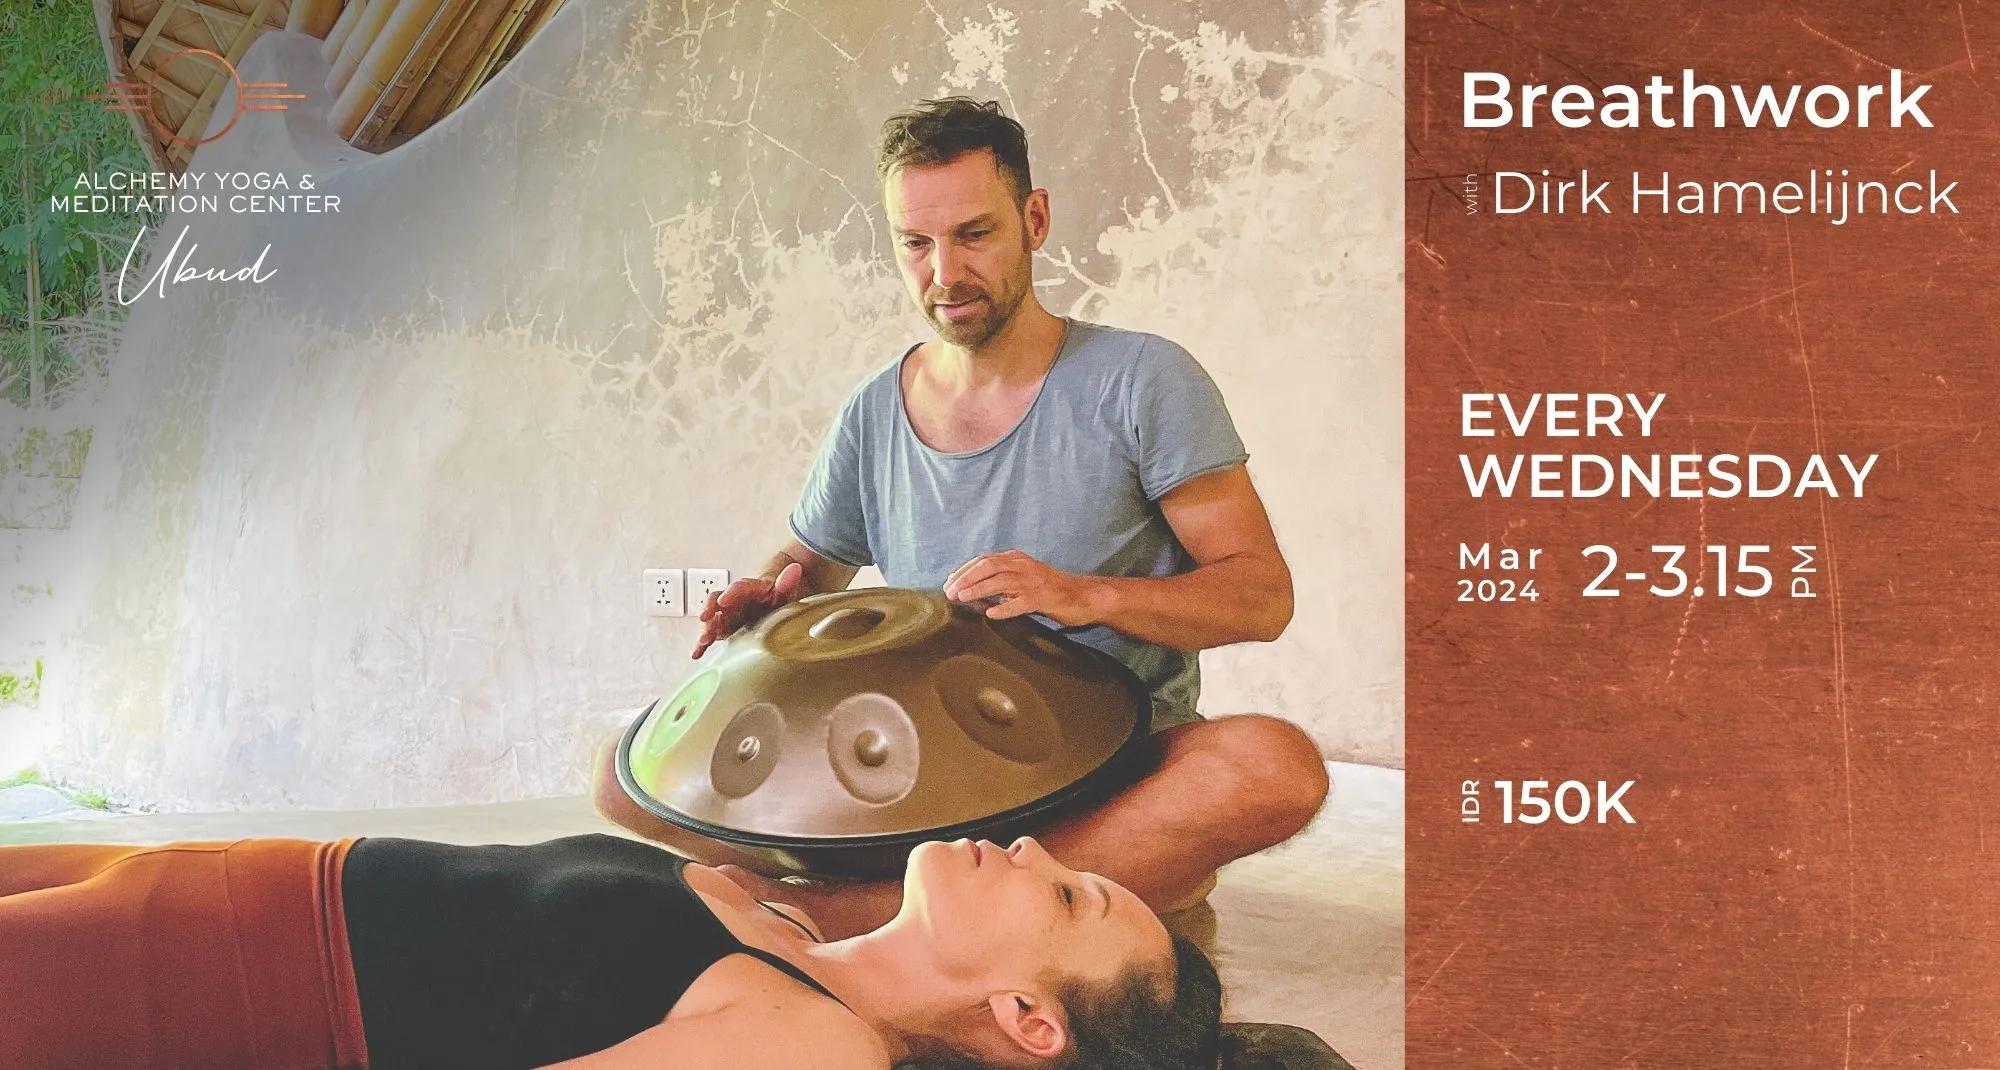 Event at Alchemy Yoga and Meditation Center every Wednesday 2024: Breathwork with Dirk Hamelijnck